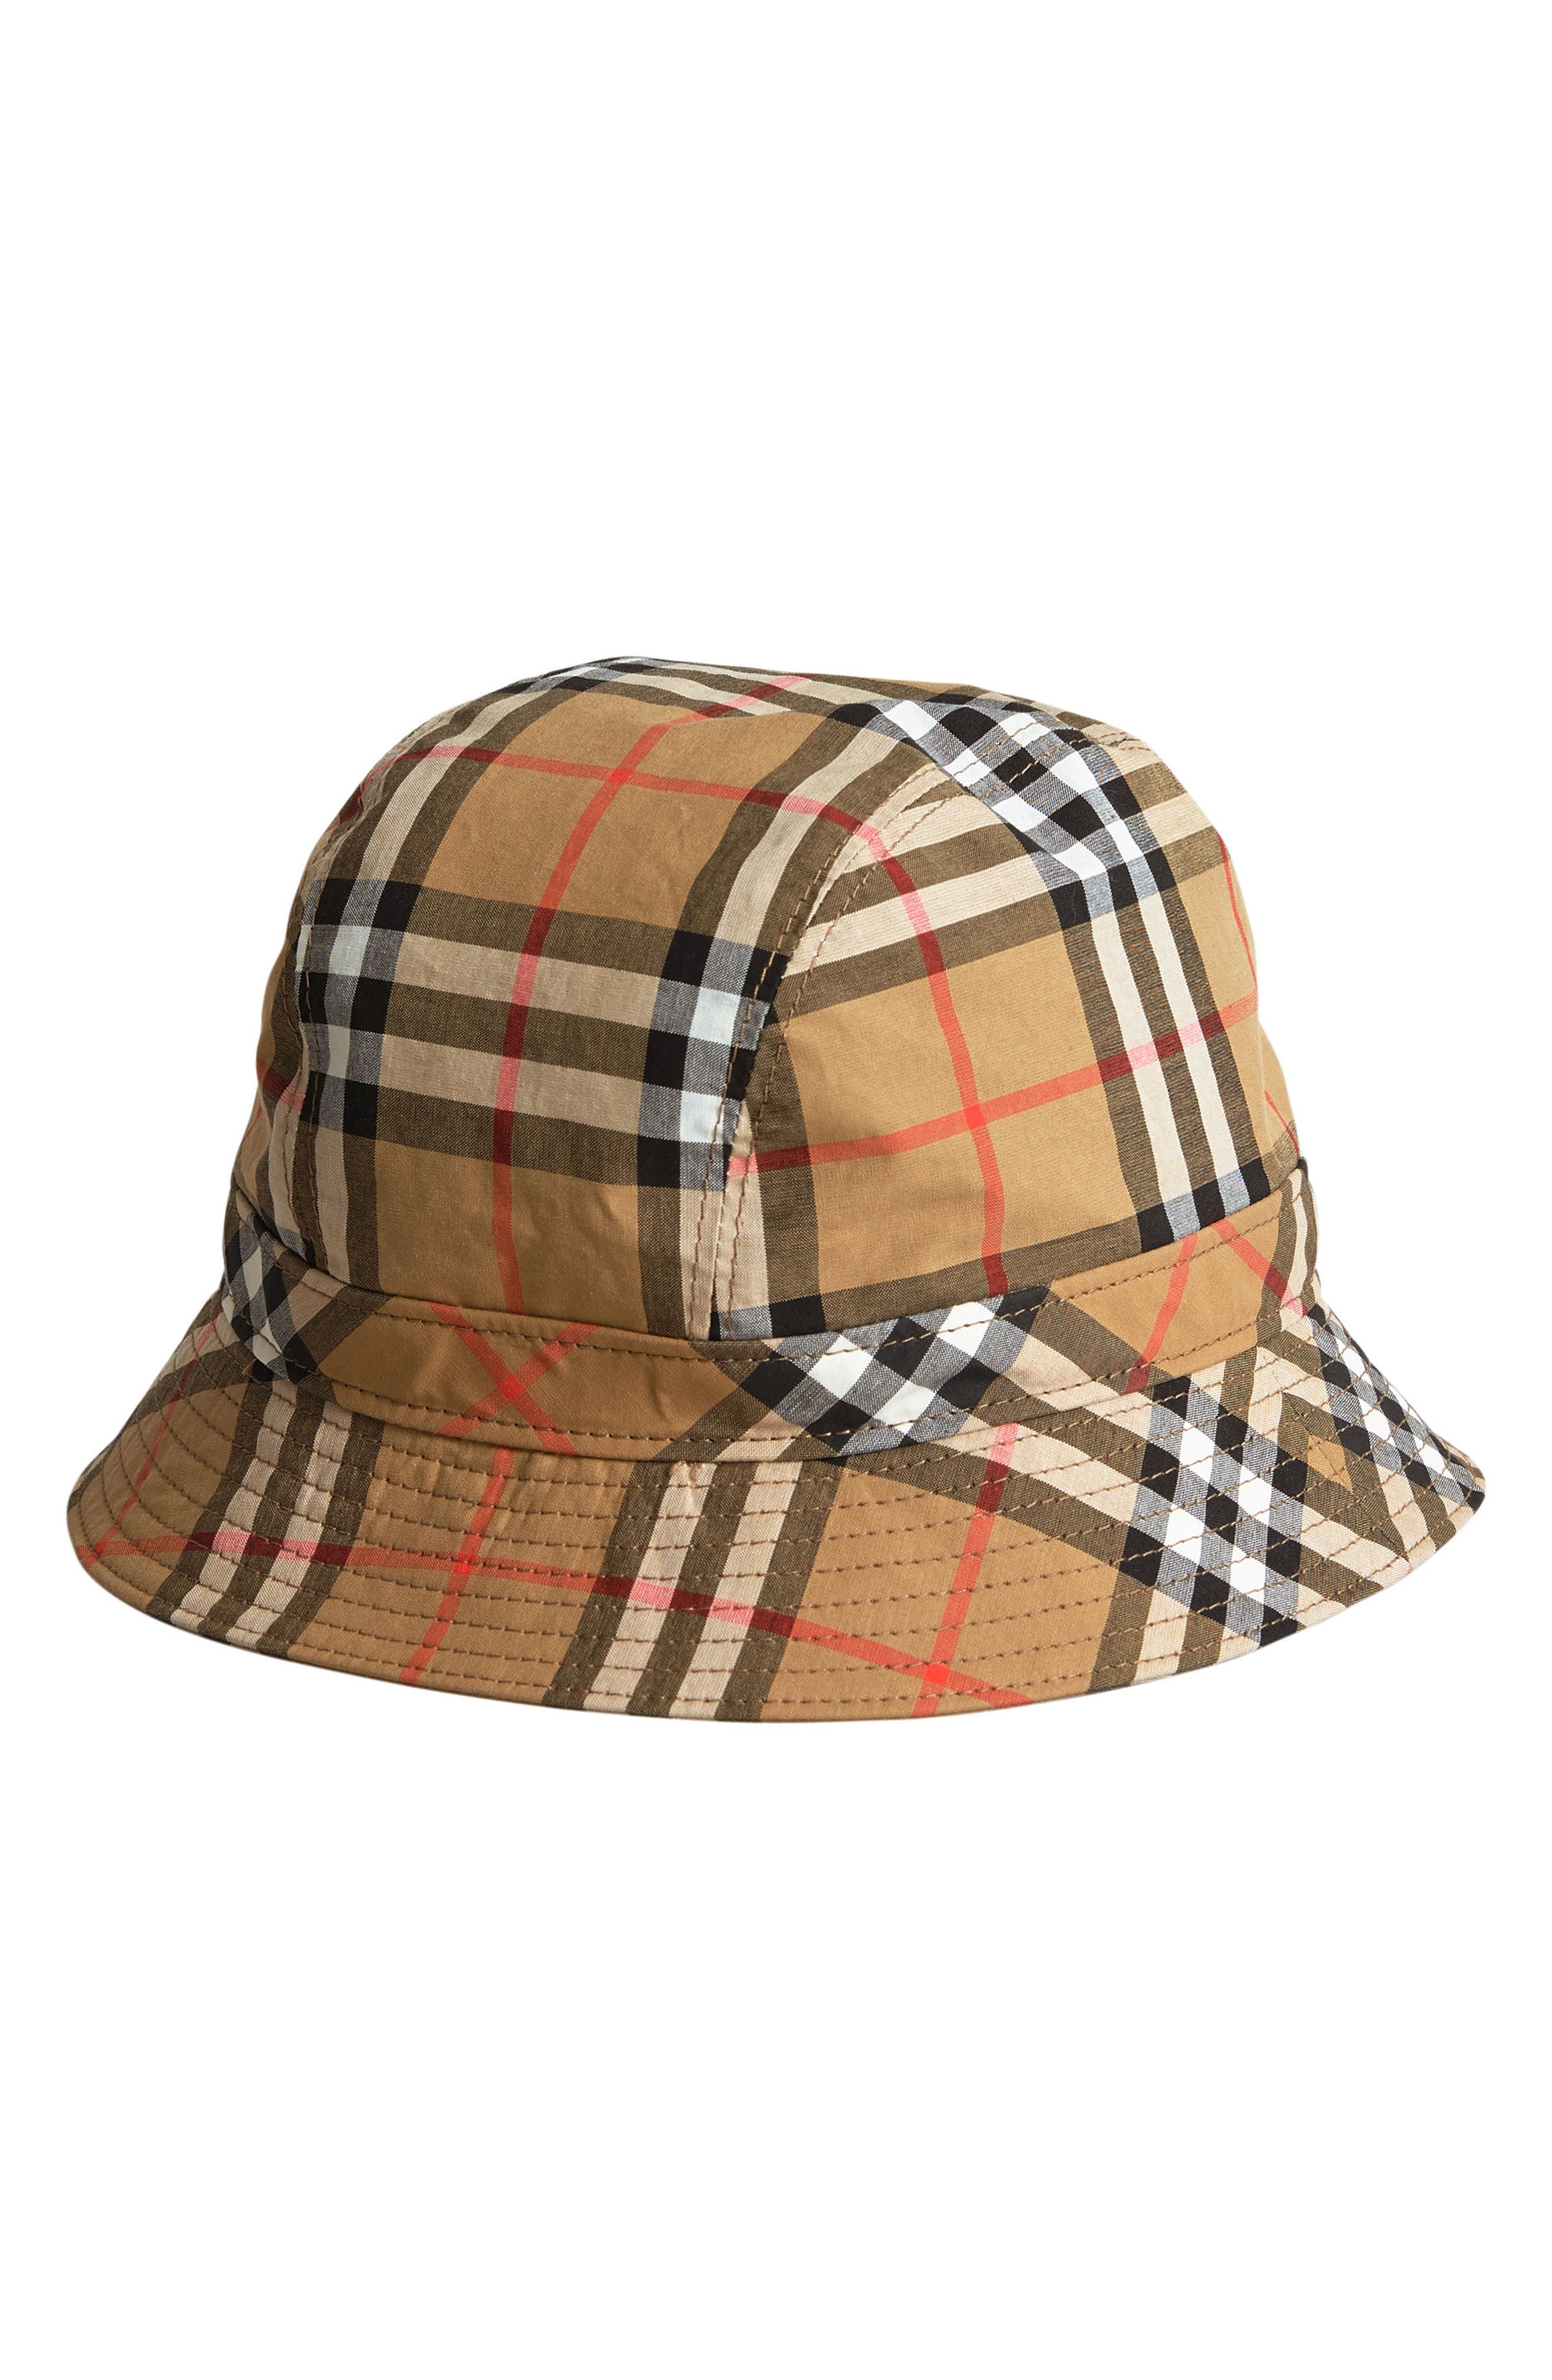 burberry hat vintage